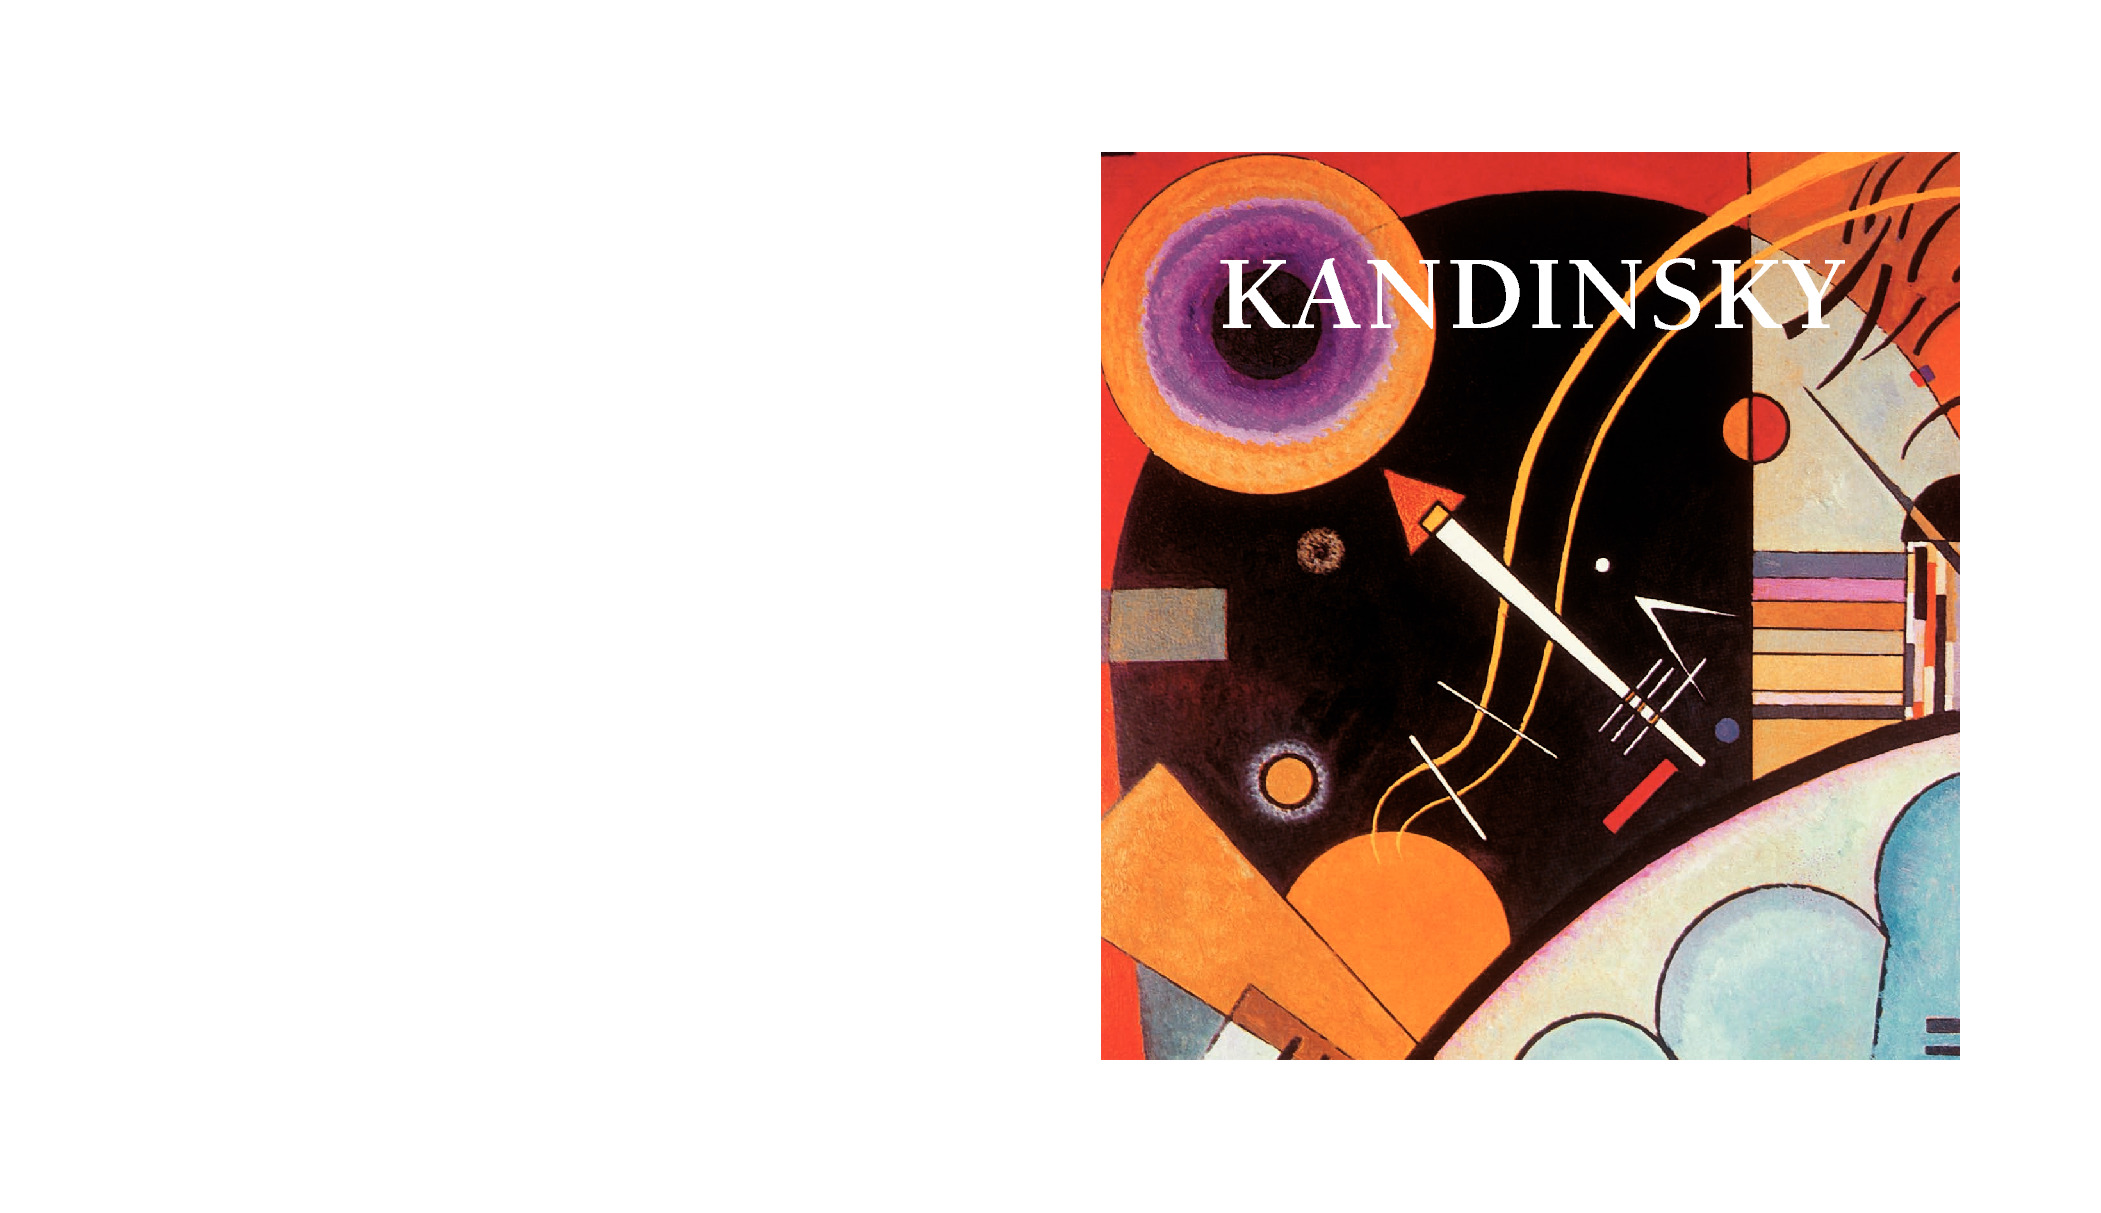 Kandinsky-Wassily Kandinsky-Mikhail Guerman-Paris-ingilizce-82s